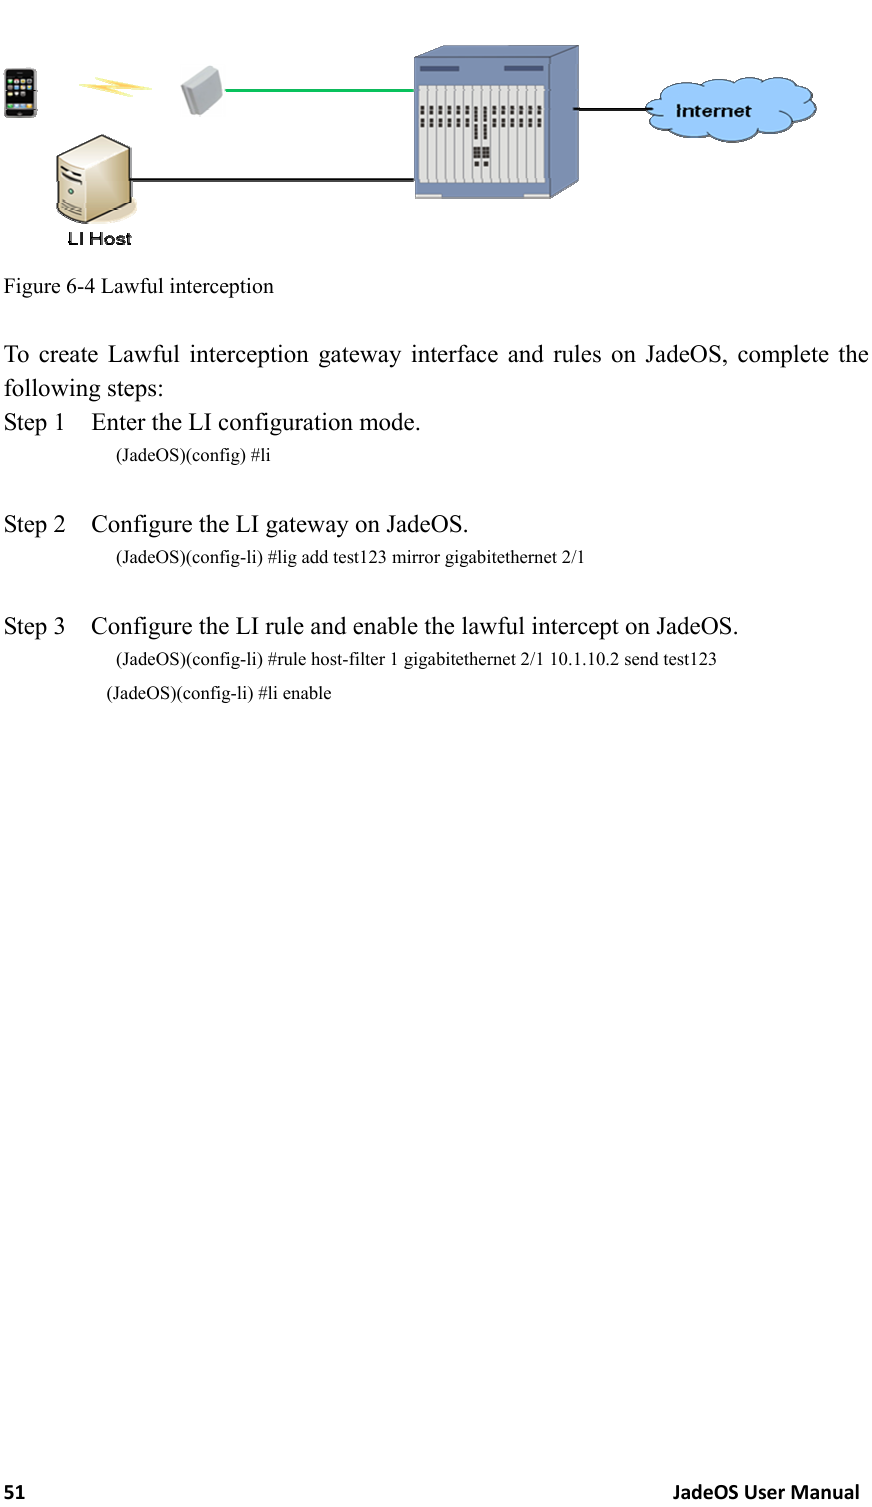 51JadeOSUserManual Figure 6-4 Lawful interception  To create Lawful interception gateway interface and rules on JadeOS, complete the following steps: Step 1   Enter the LI configuration mode.  (JadeOS)(config) #li  Step 2   Configure the LI gateway on JadeOS.   (JadeOS)(config-li) #lig add test123 mirror gigabitethernet 2/1  Step 3    Configure the LI rule and enable the lawful intercept on JadeOS.   (JadeOS)(config-li) #rule host-filter 1 gigabitethernet 2/1 10.1.10.2 send test123 (JadeOS)(config-li) #li enable 